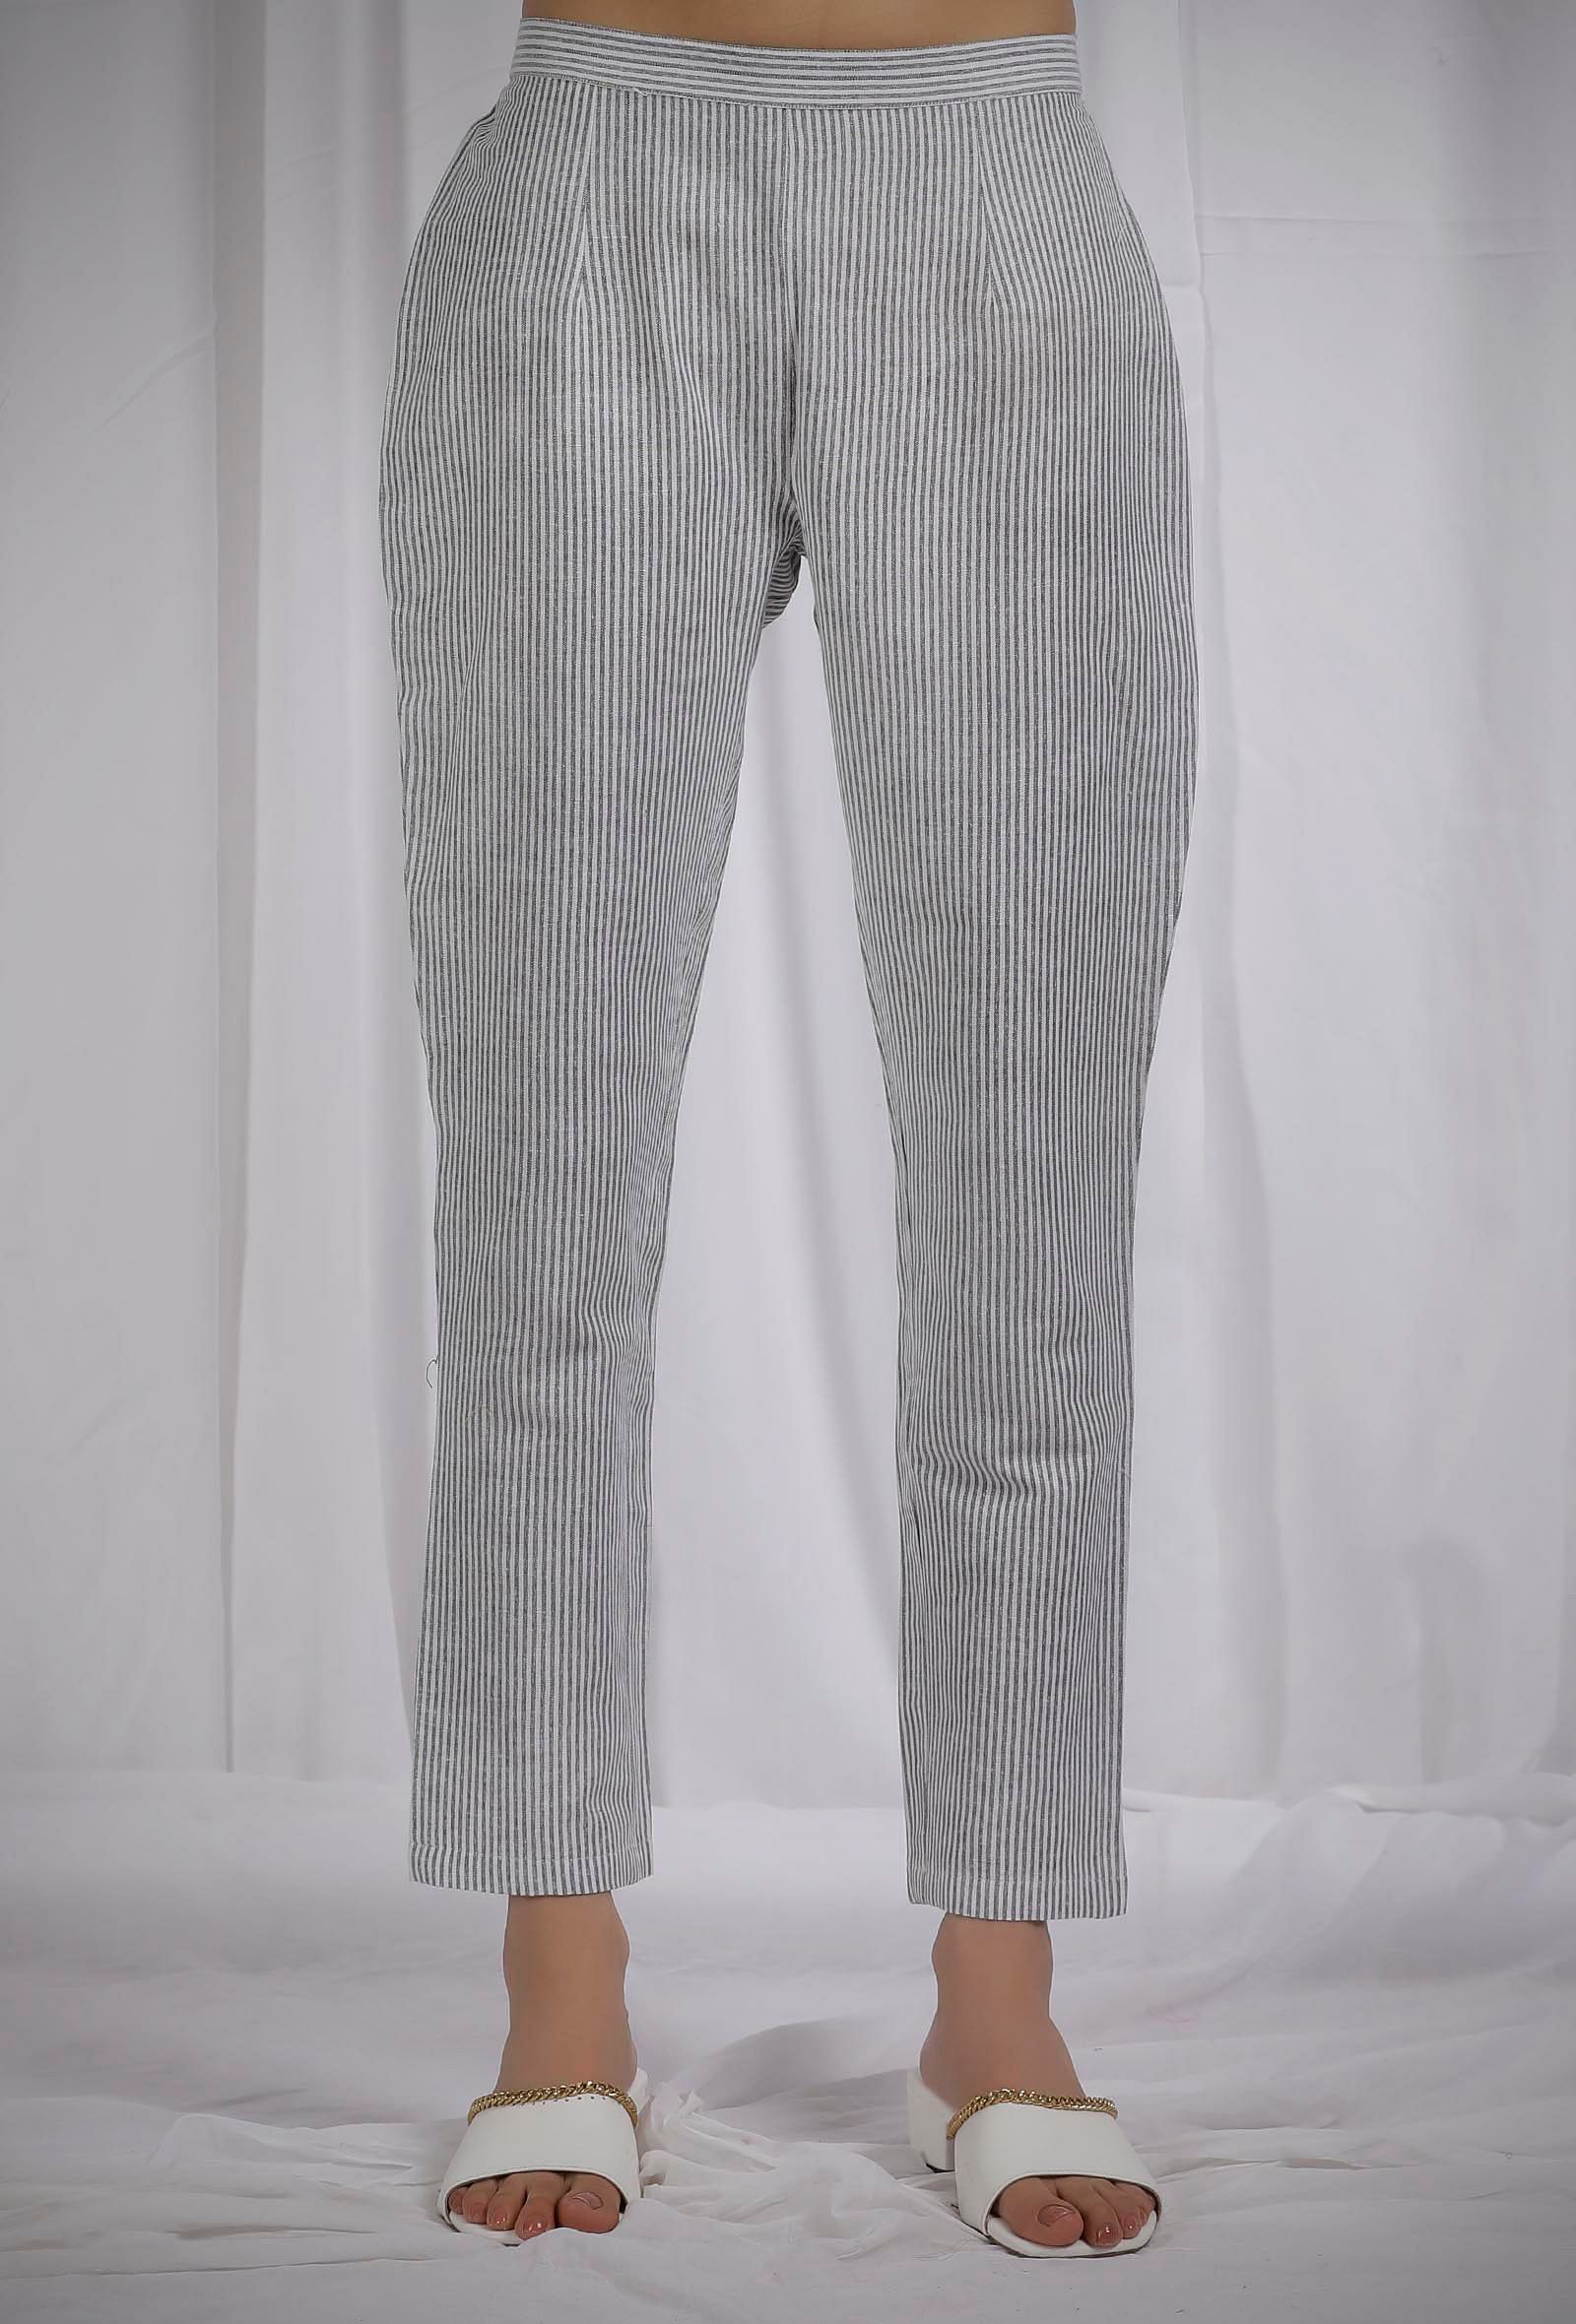 Quaclo Green White and Light Grey Women Stripe Trouser Pants Combo